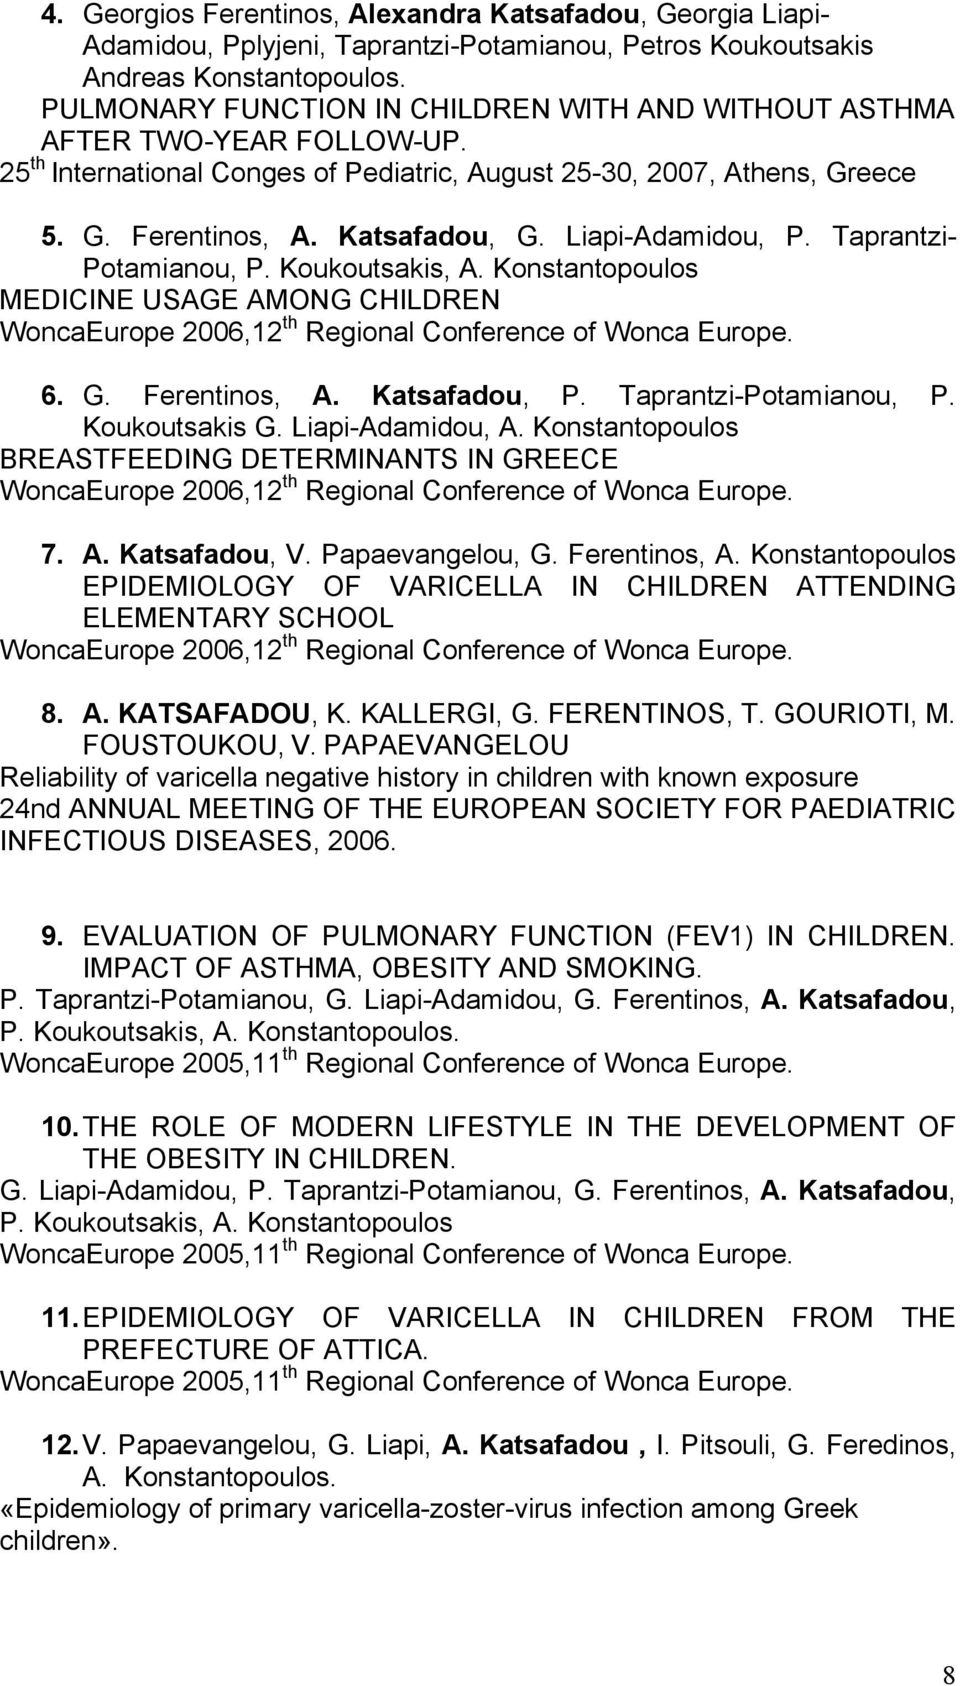 Liapi-Adamidou, P. Taprantzi- Potamianou, P. Koukoutsakis, A. Konstantopoulos MEDICINE USAGE AMONG CHILDREN WoncaEurope 2006,12 th Regional Conference of Wonca Europe. 6. G. Ferentinos, A.